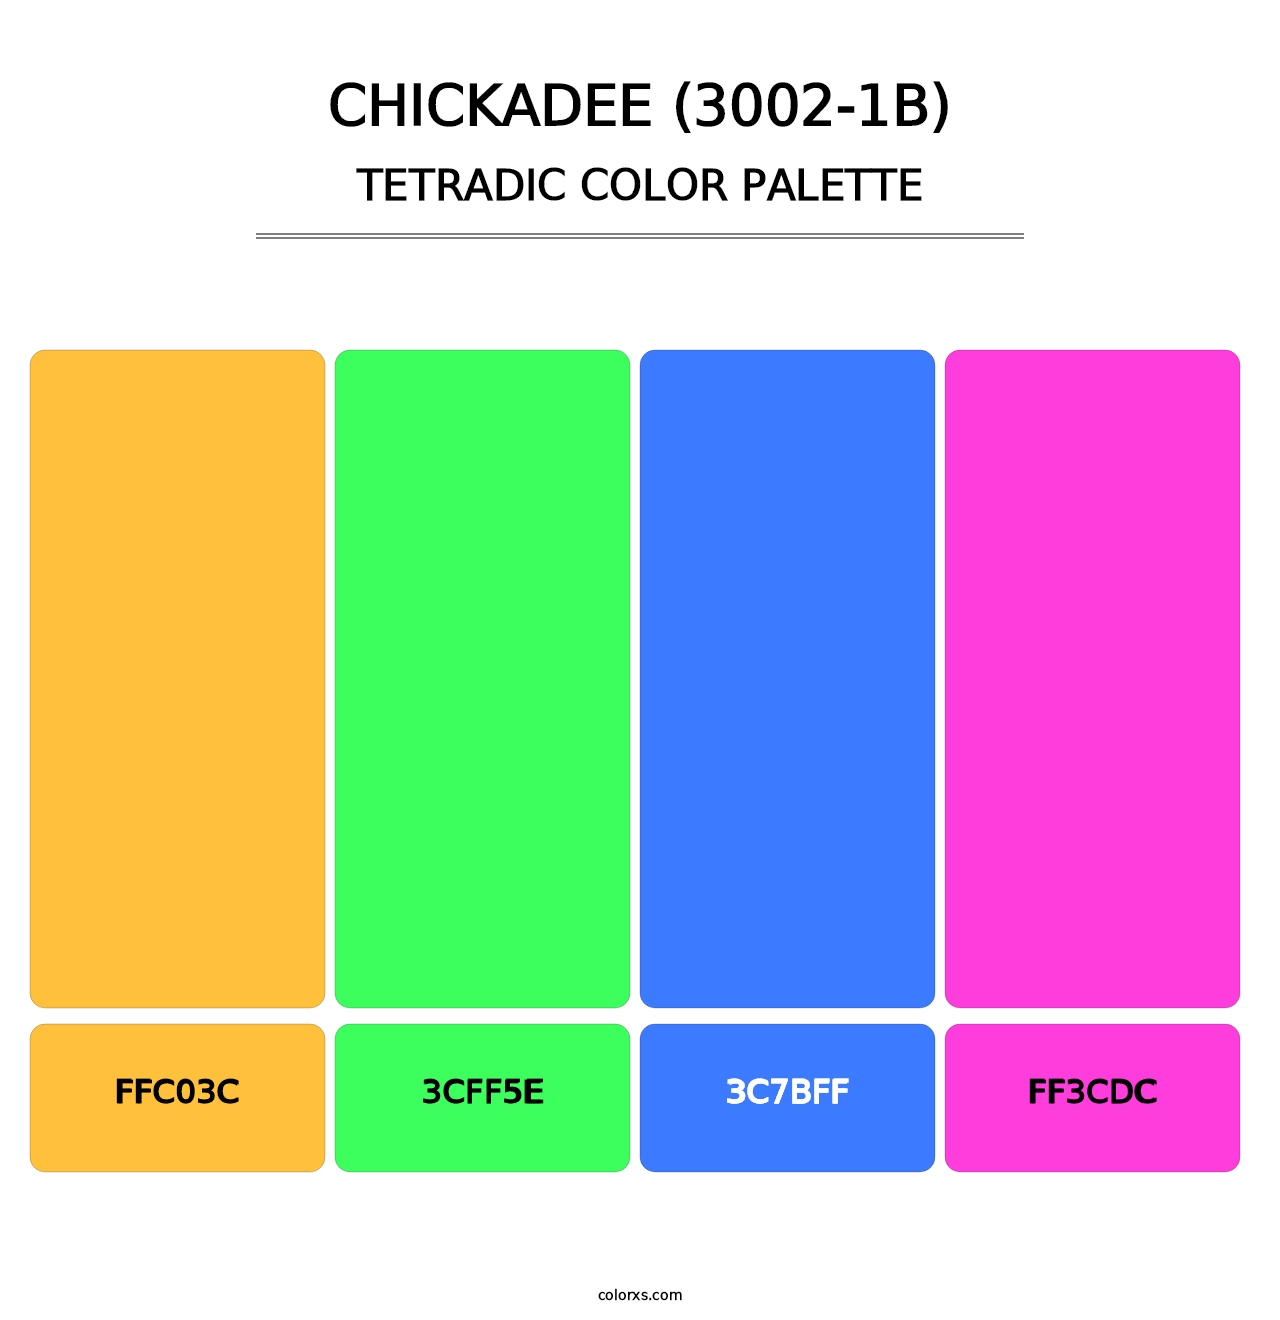 Chickadee (3002-1B) - Tetradic Color Palette